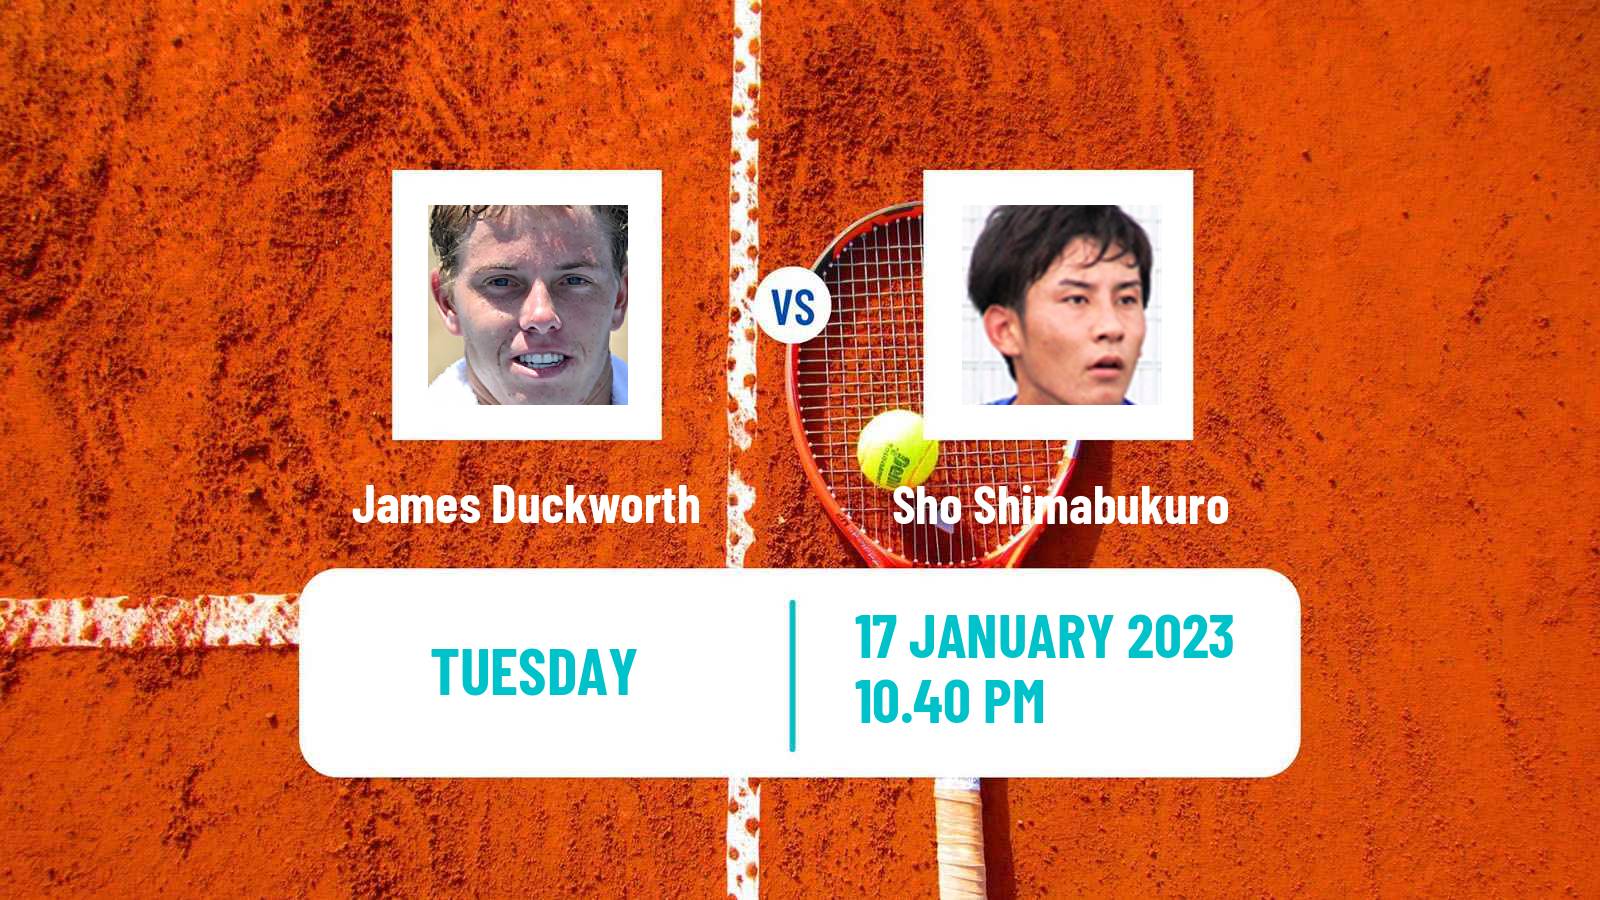 Tennis ATP Challenger James Duckworth - Sho Shimabukuro